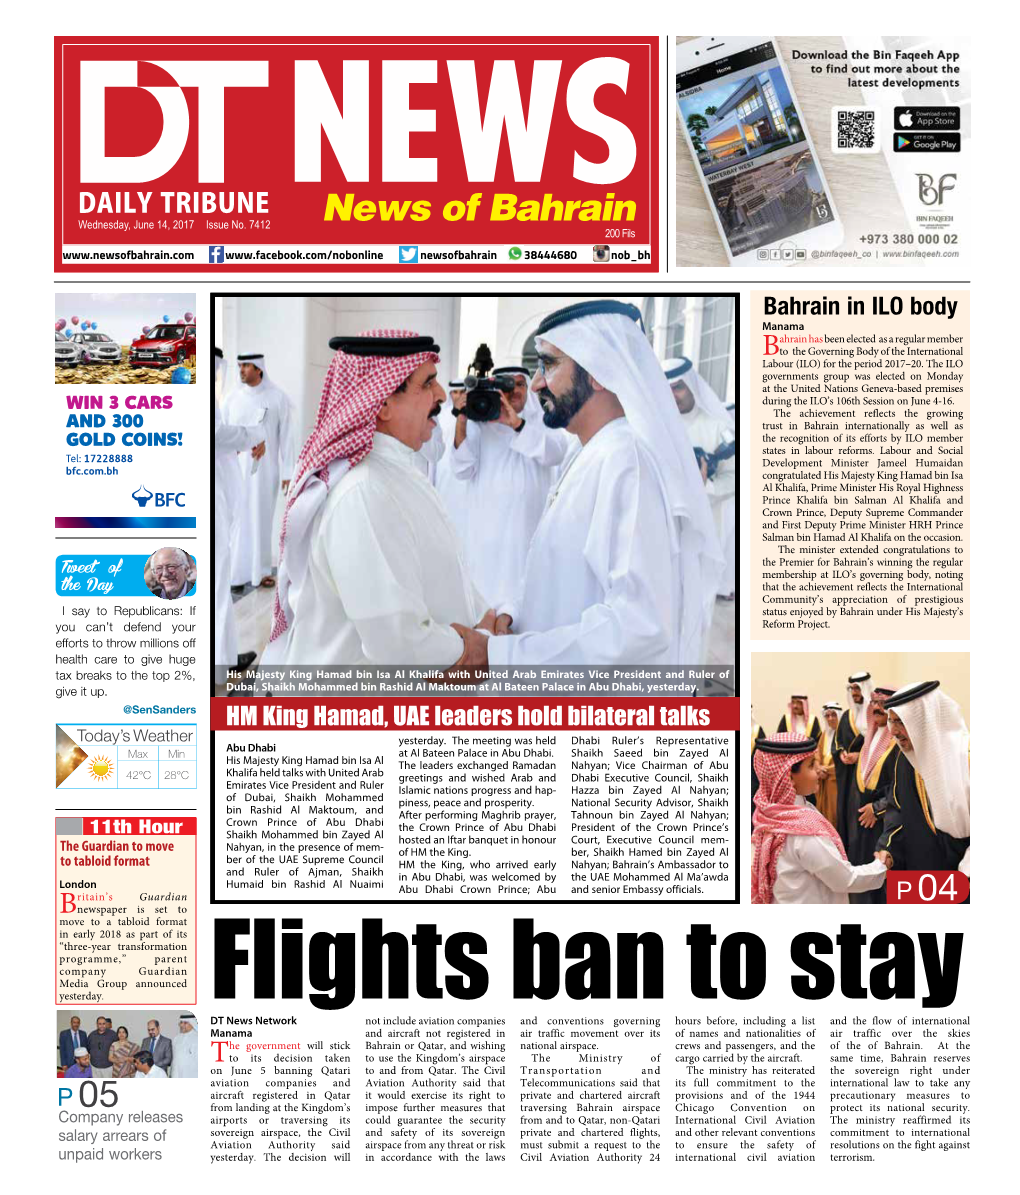 P 05 Bahrain in ILO Body HM King Hamad, UAE Leaders Hold Bilateral